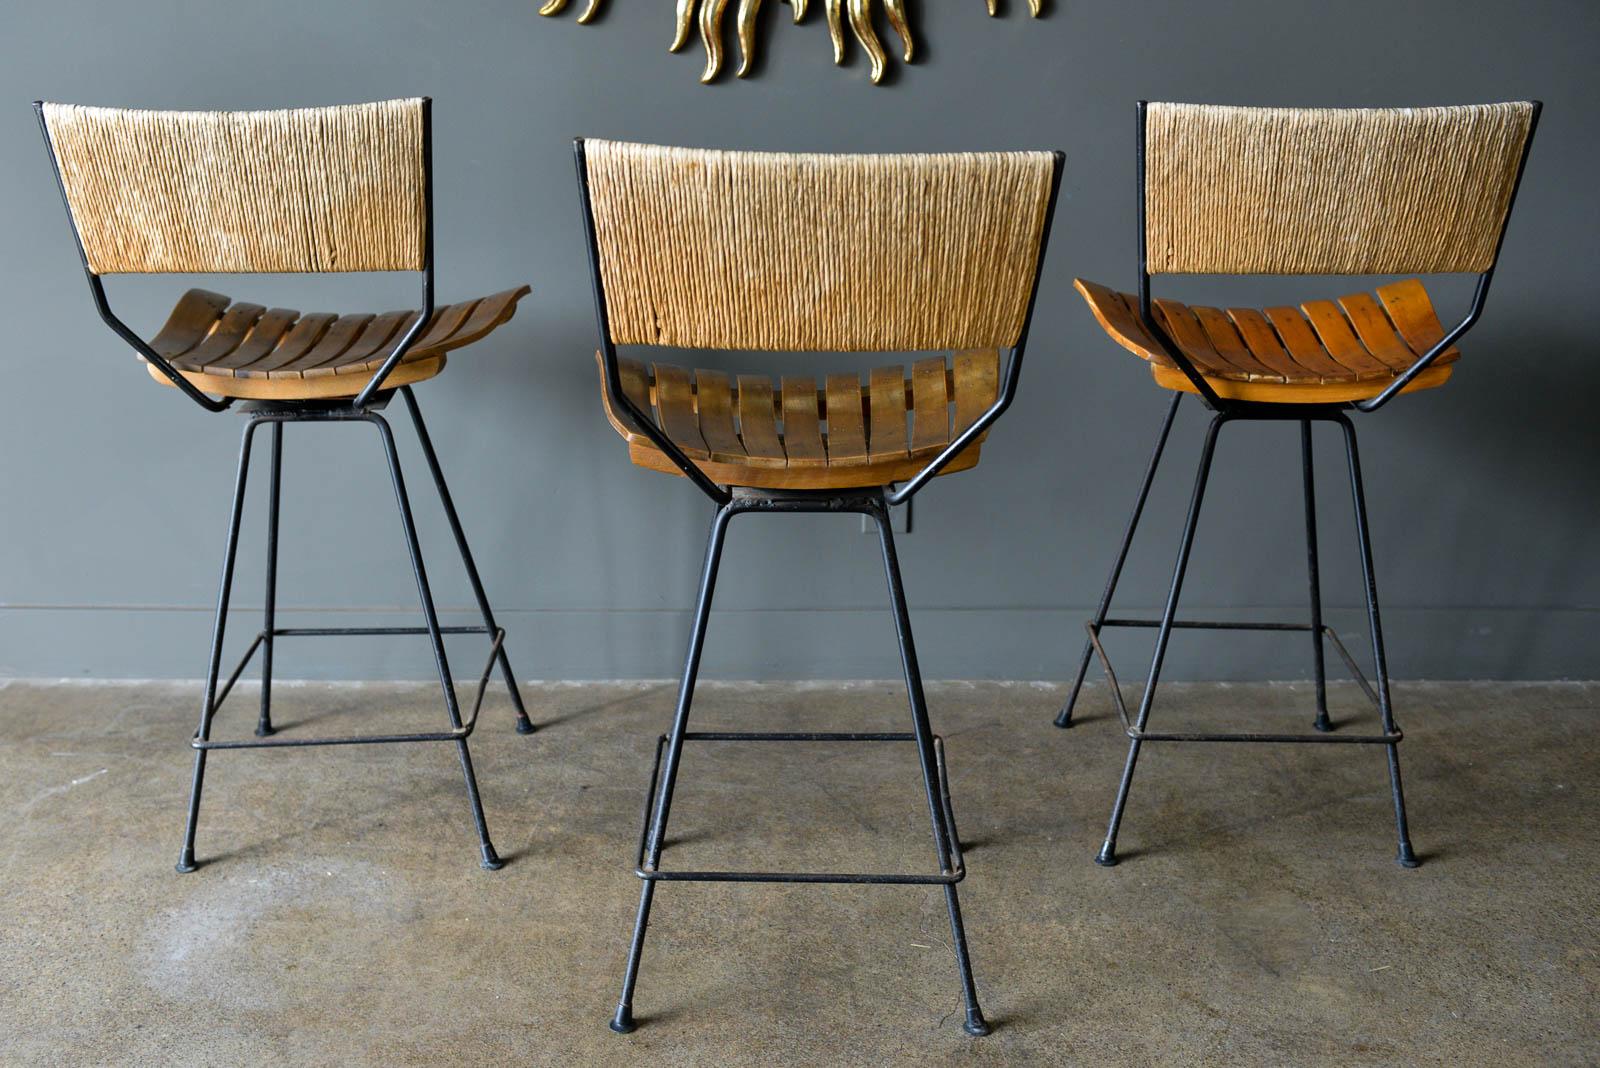 Arthur Umanoff iron and slatted wood barstools, circa 1965. Swivel seats rotate 360 degrees smoothly. Iron has some patina on the legs. Original floor protectors. Counter height stools, seats measure: 26